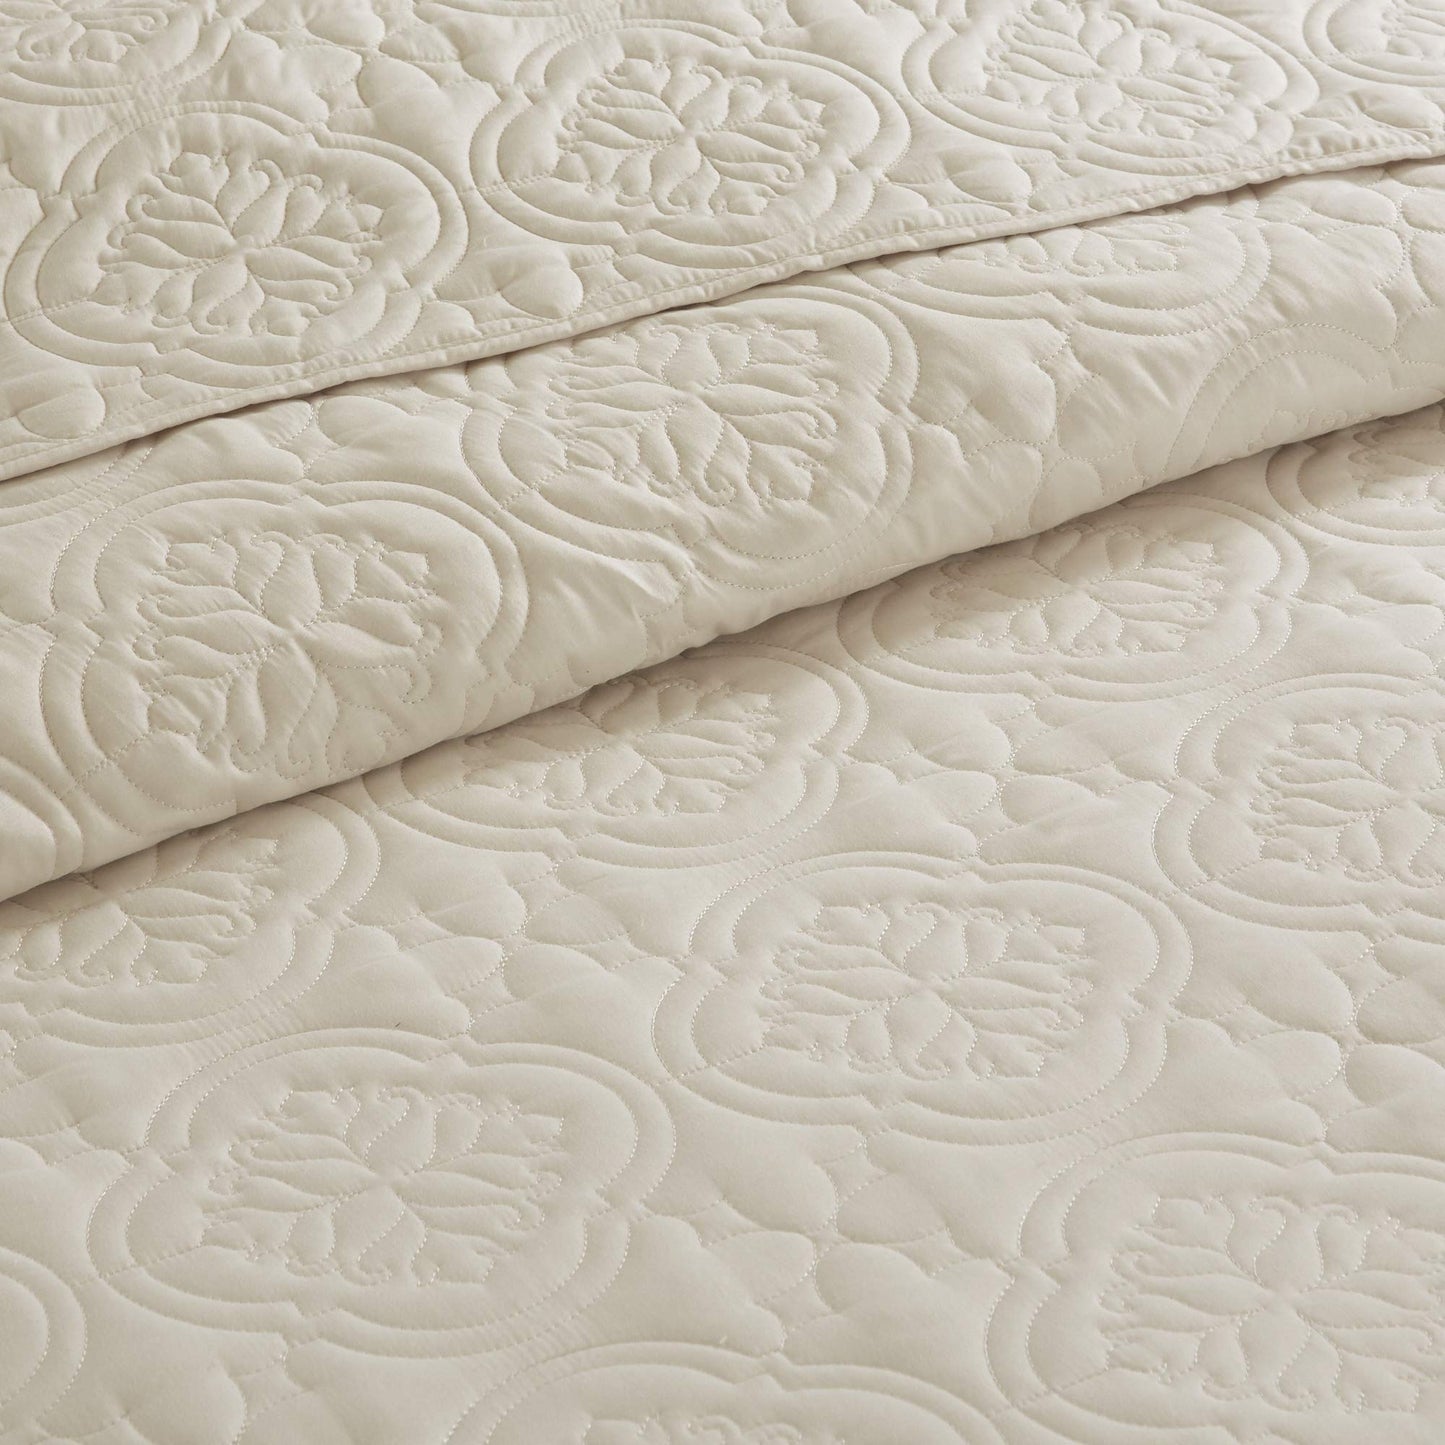 510 Design Glen 3 Piece Reversible Damask Bedspread Set, King/Cal King, Cream